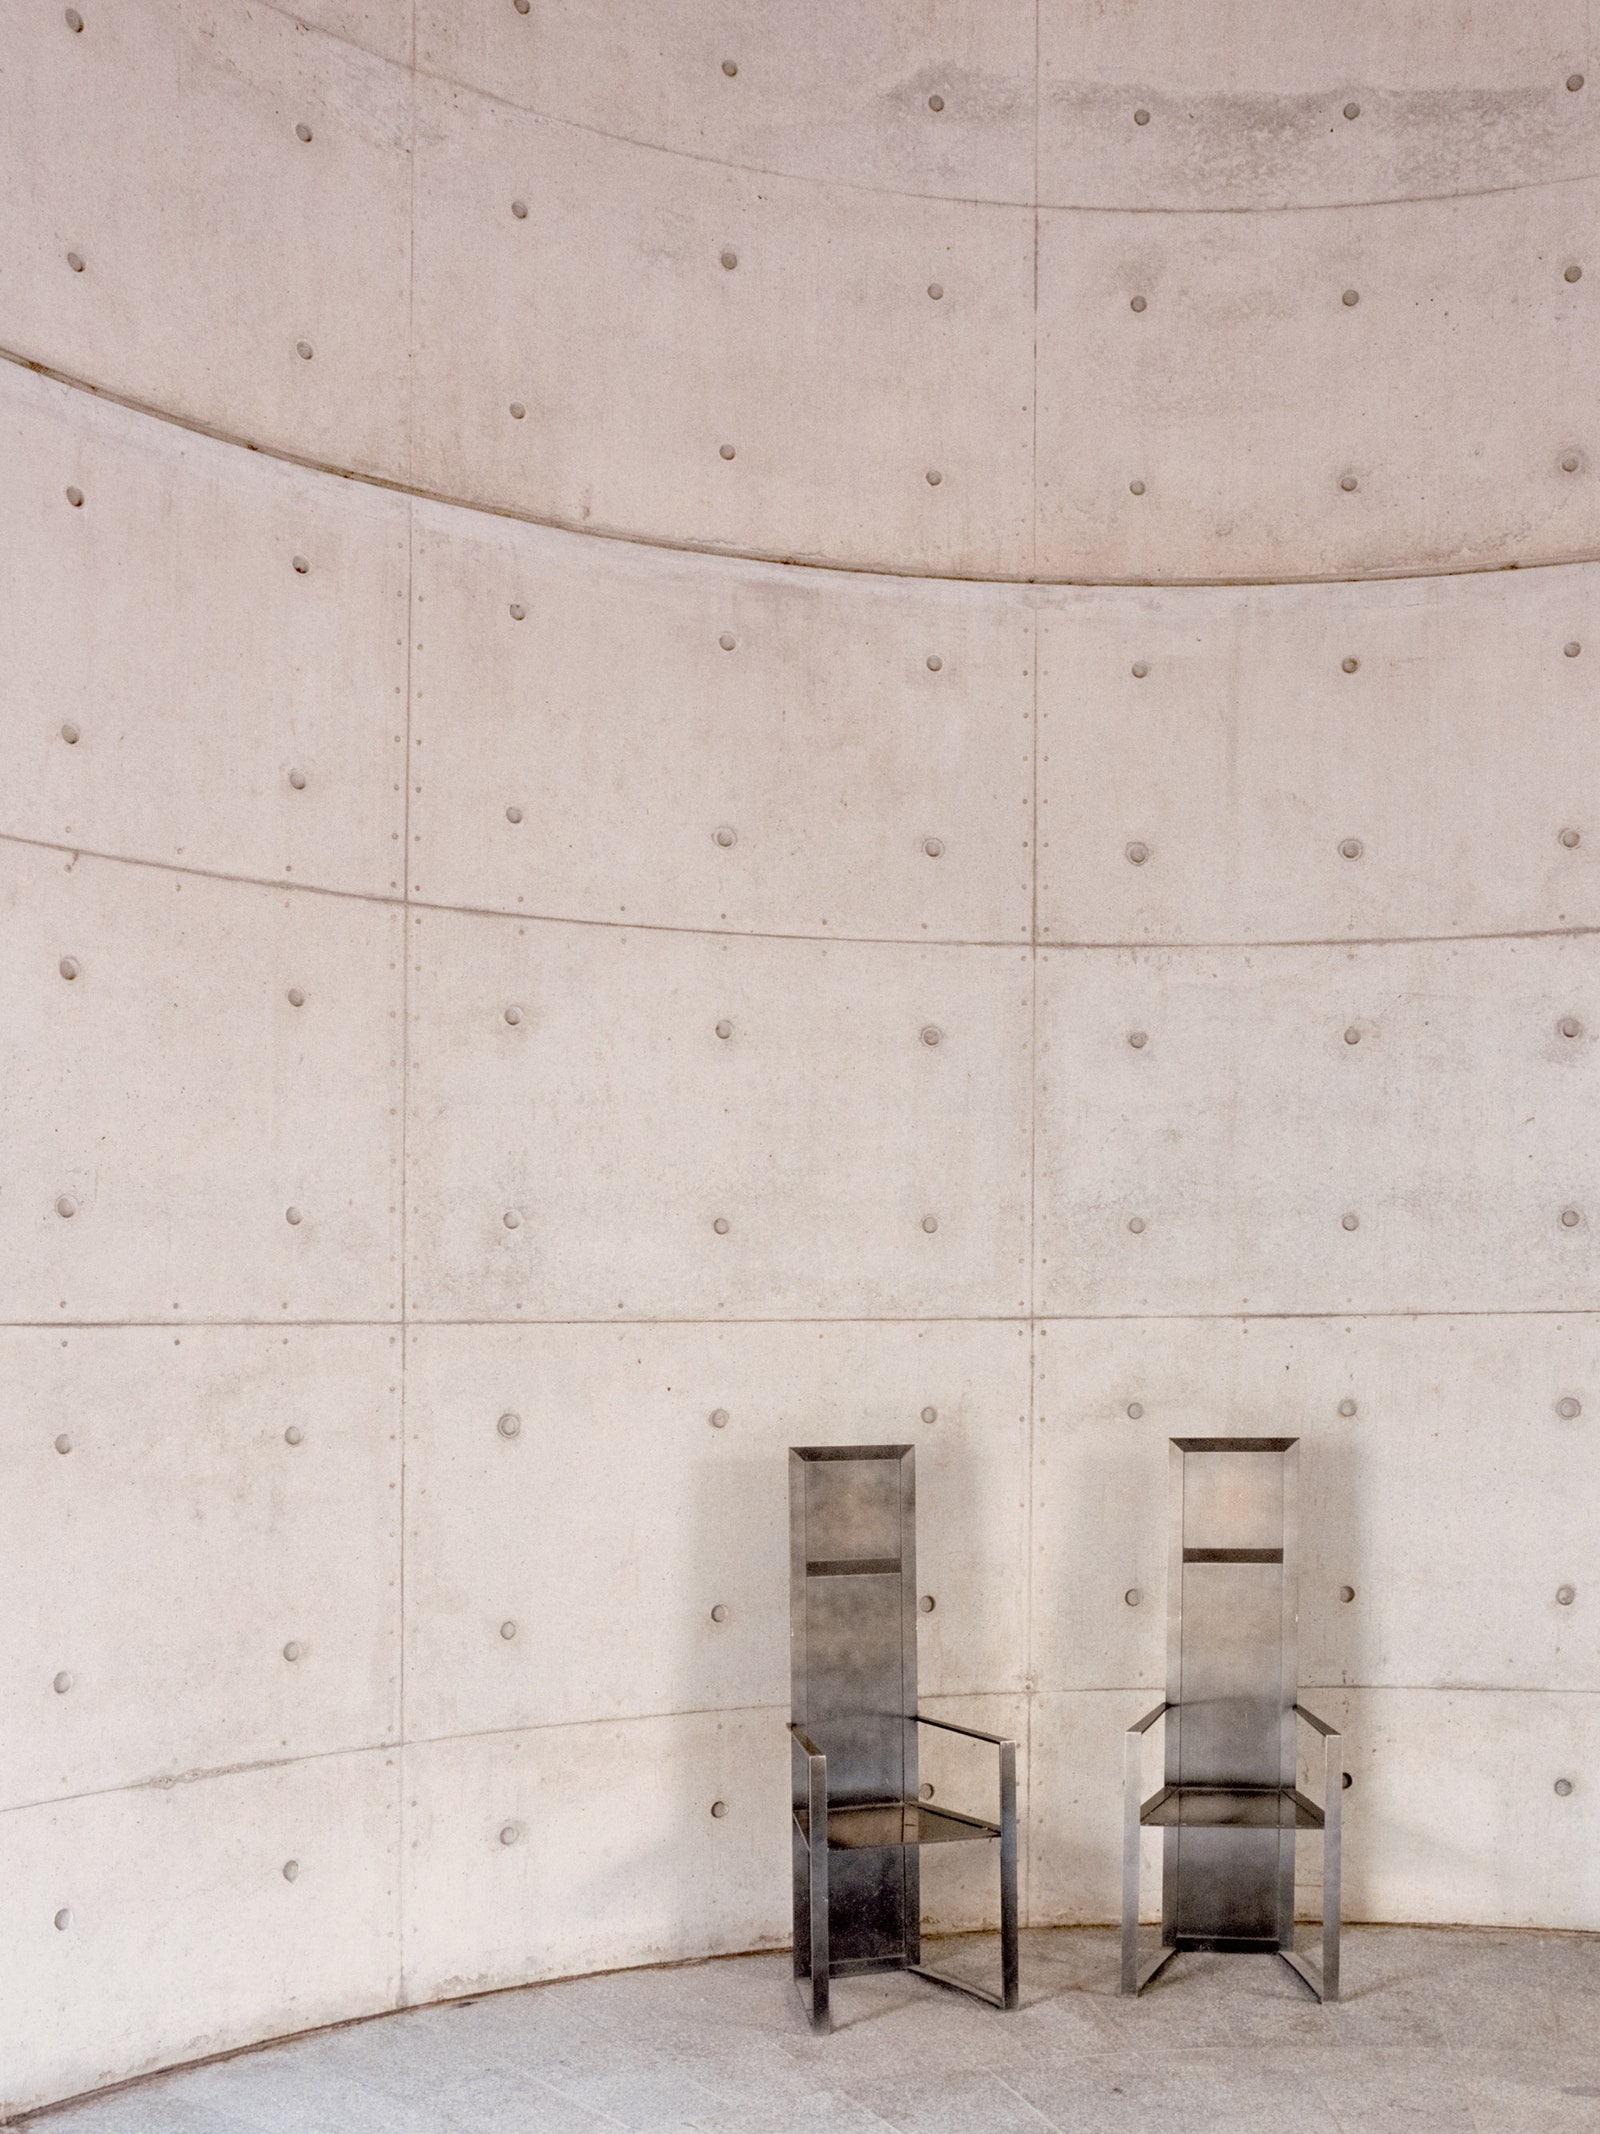 Архитектура в объективе павильон для медитации по проекту Тадао Андо